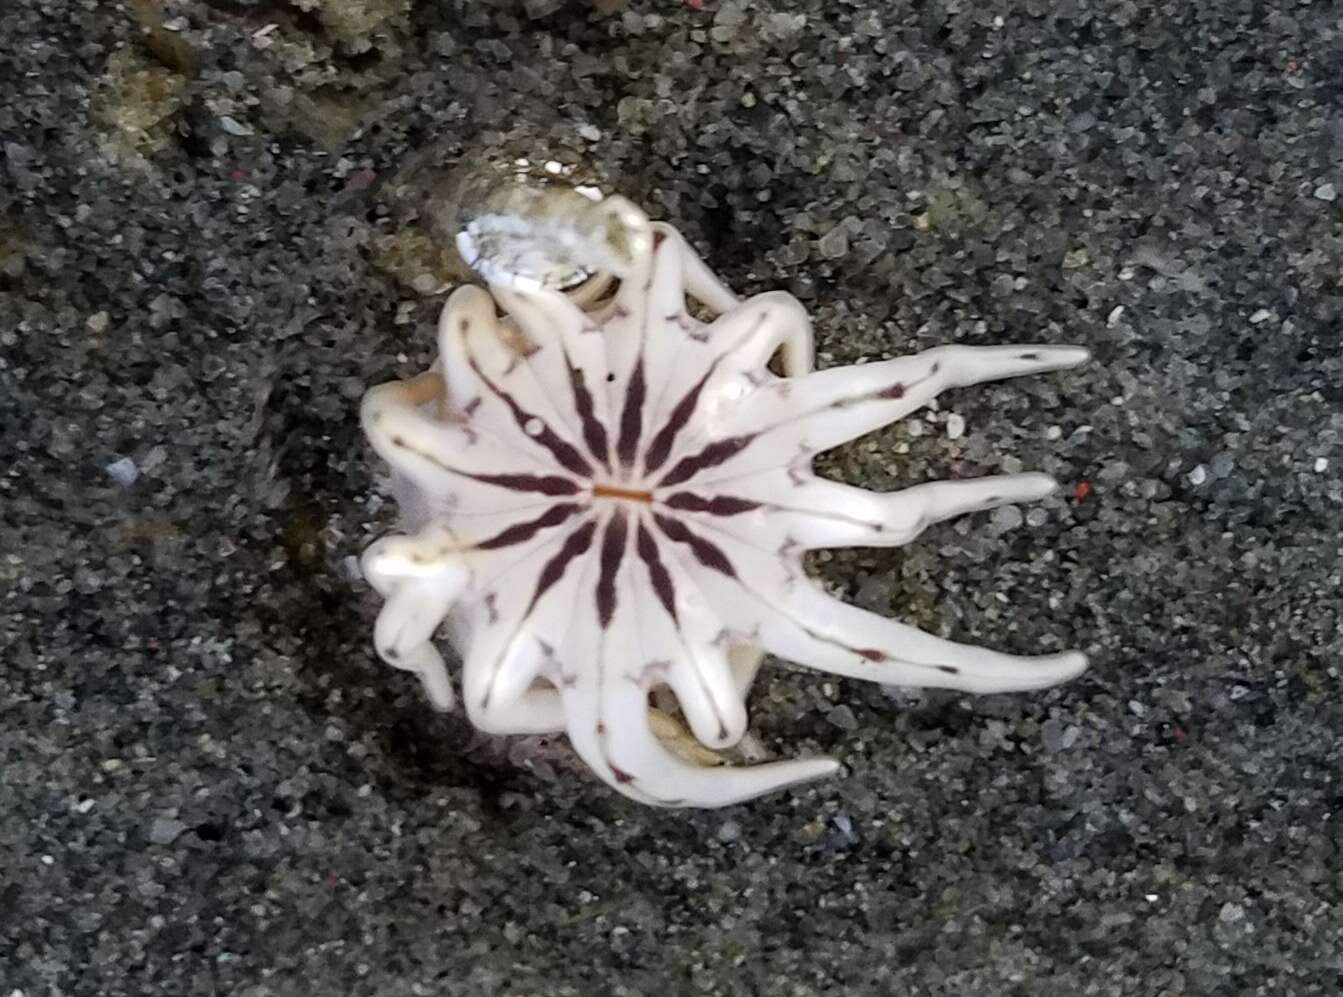 Image of cryptic burrowing anemone